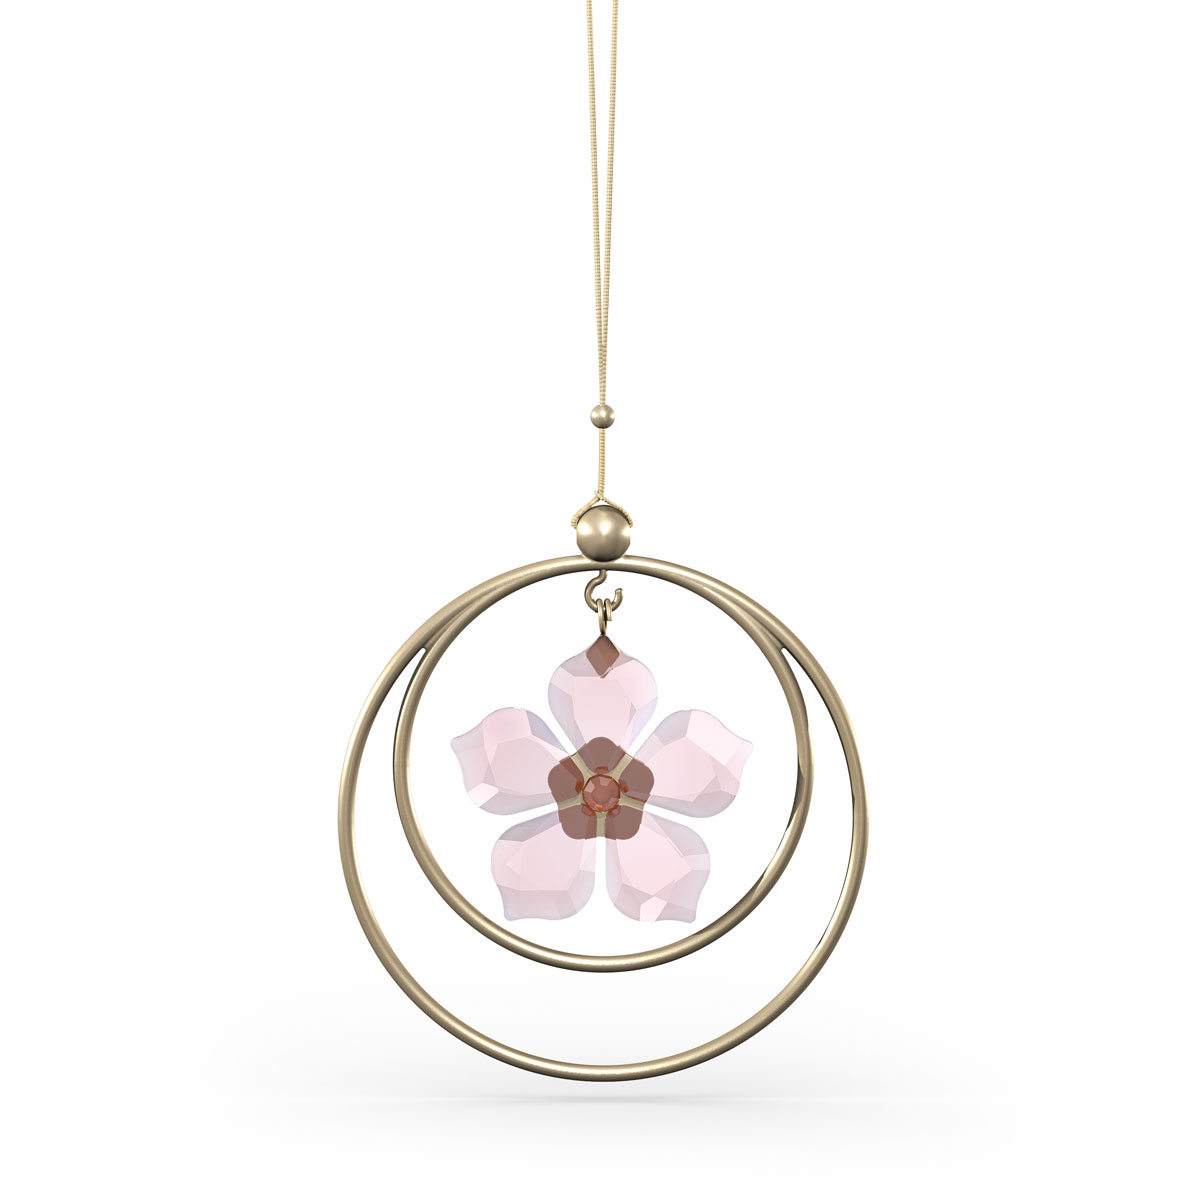 Swarovski Flowers Garden Tales Ornament, Cherry Blossom